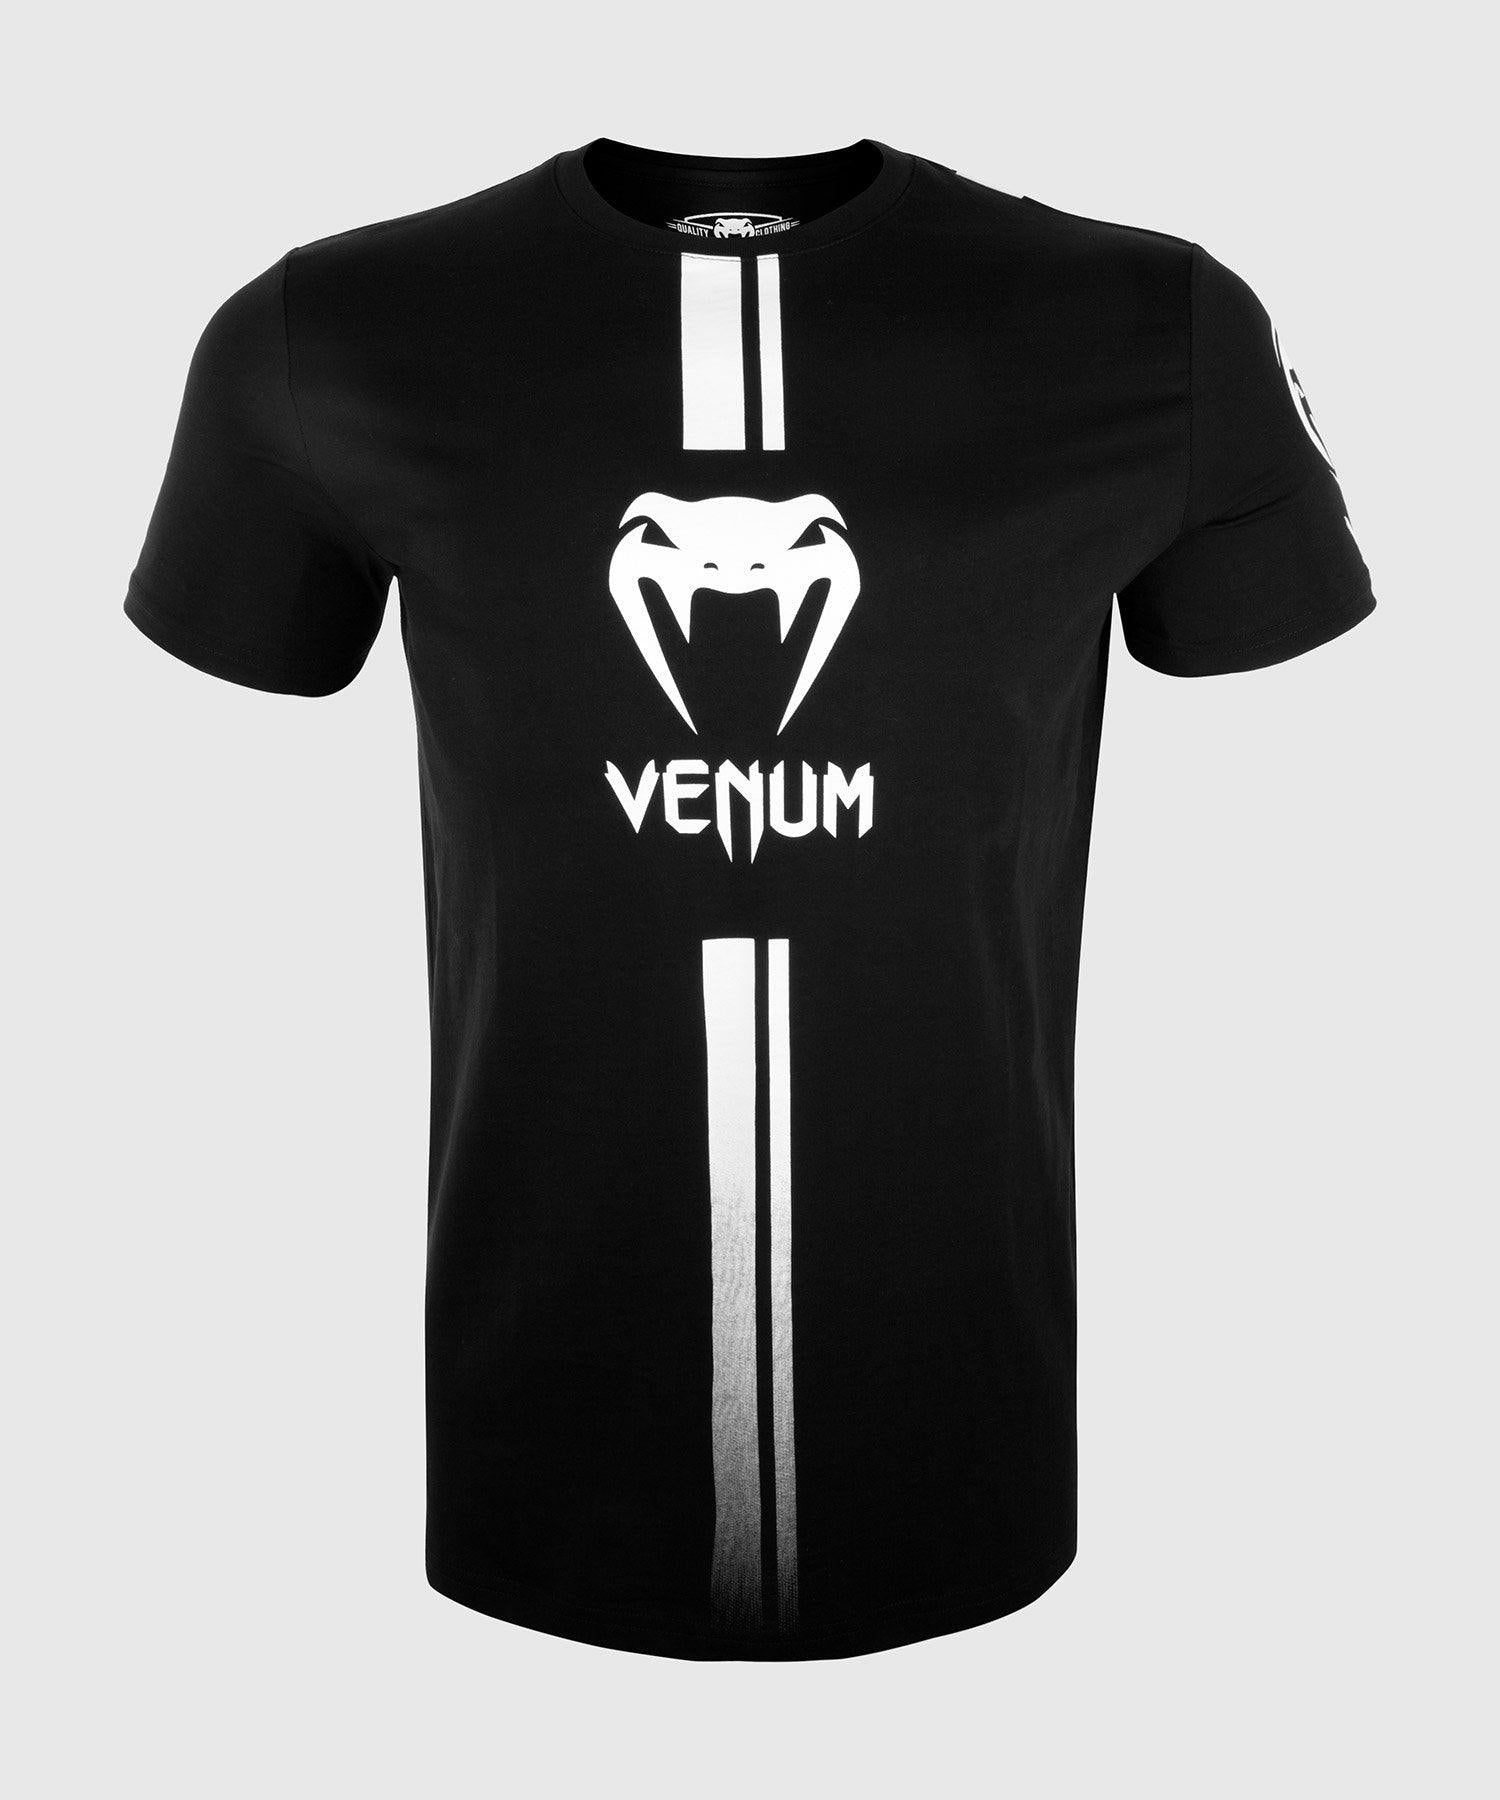 Venum Logos T-Shirt - Black/White Picture 1